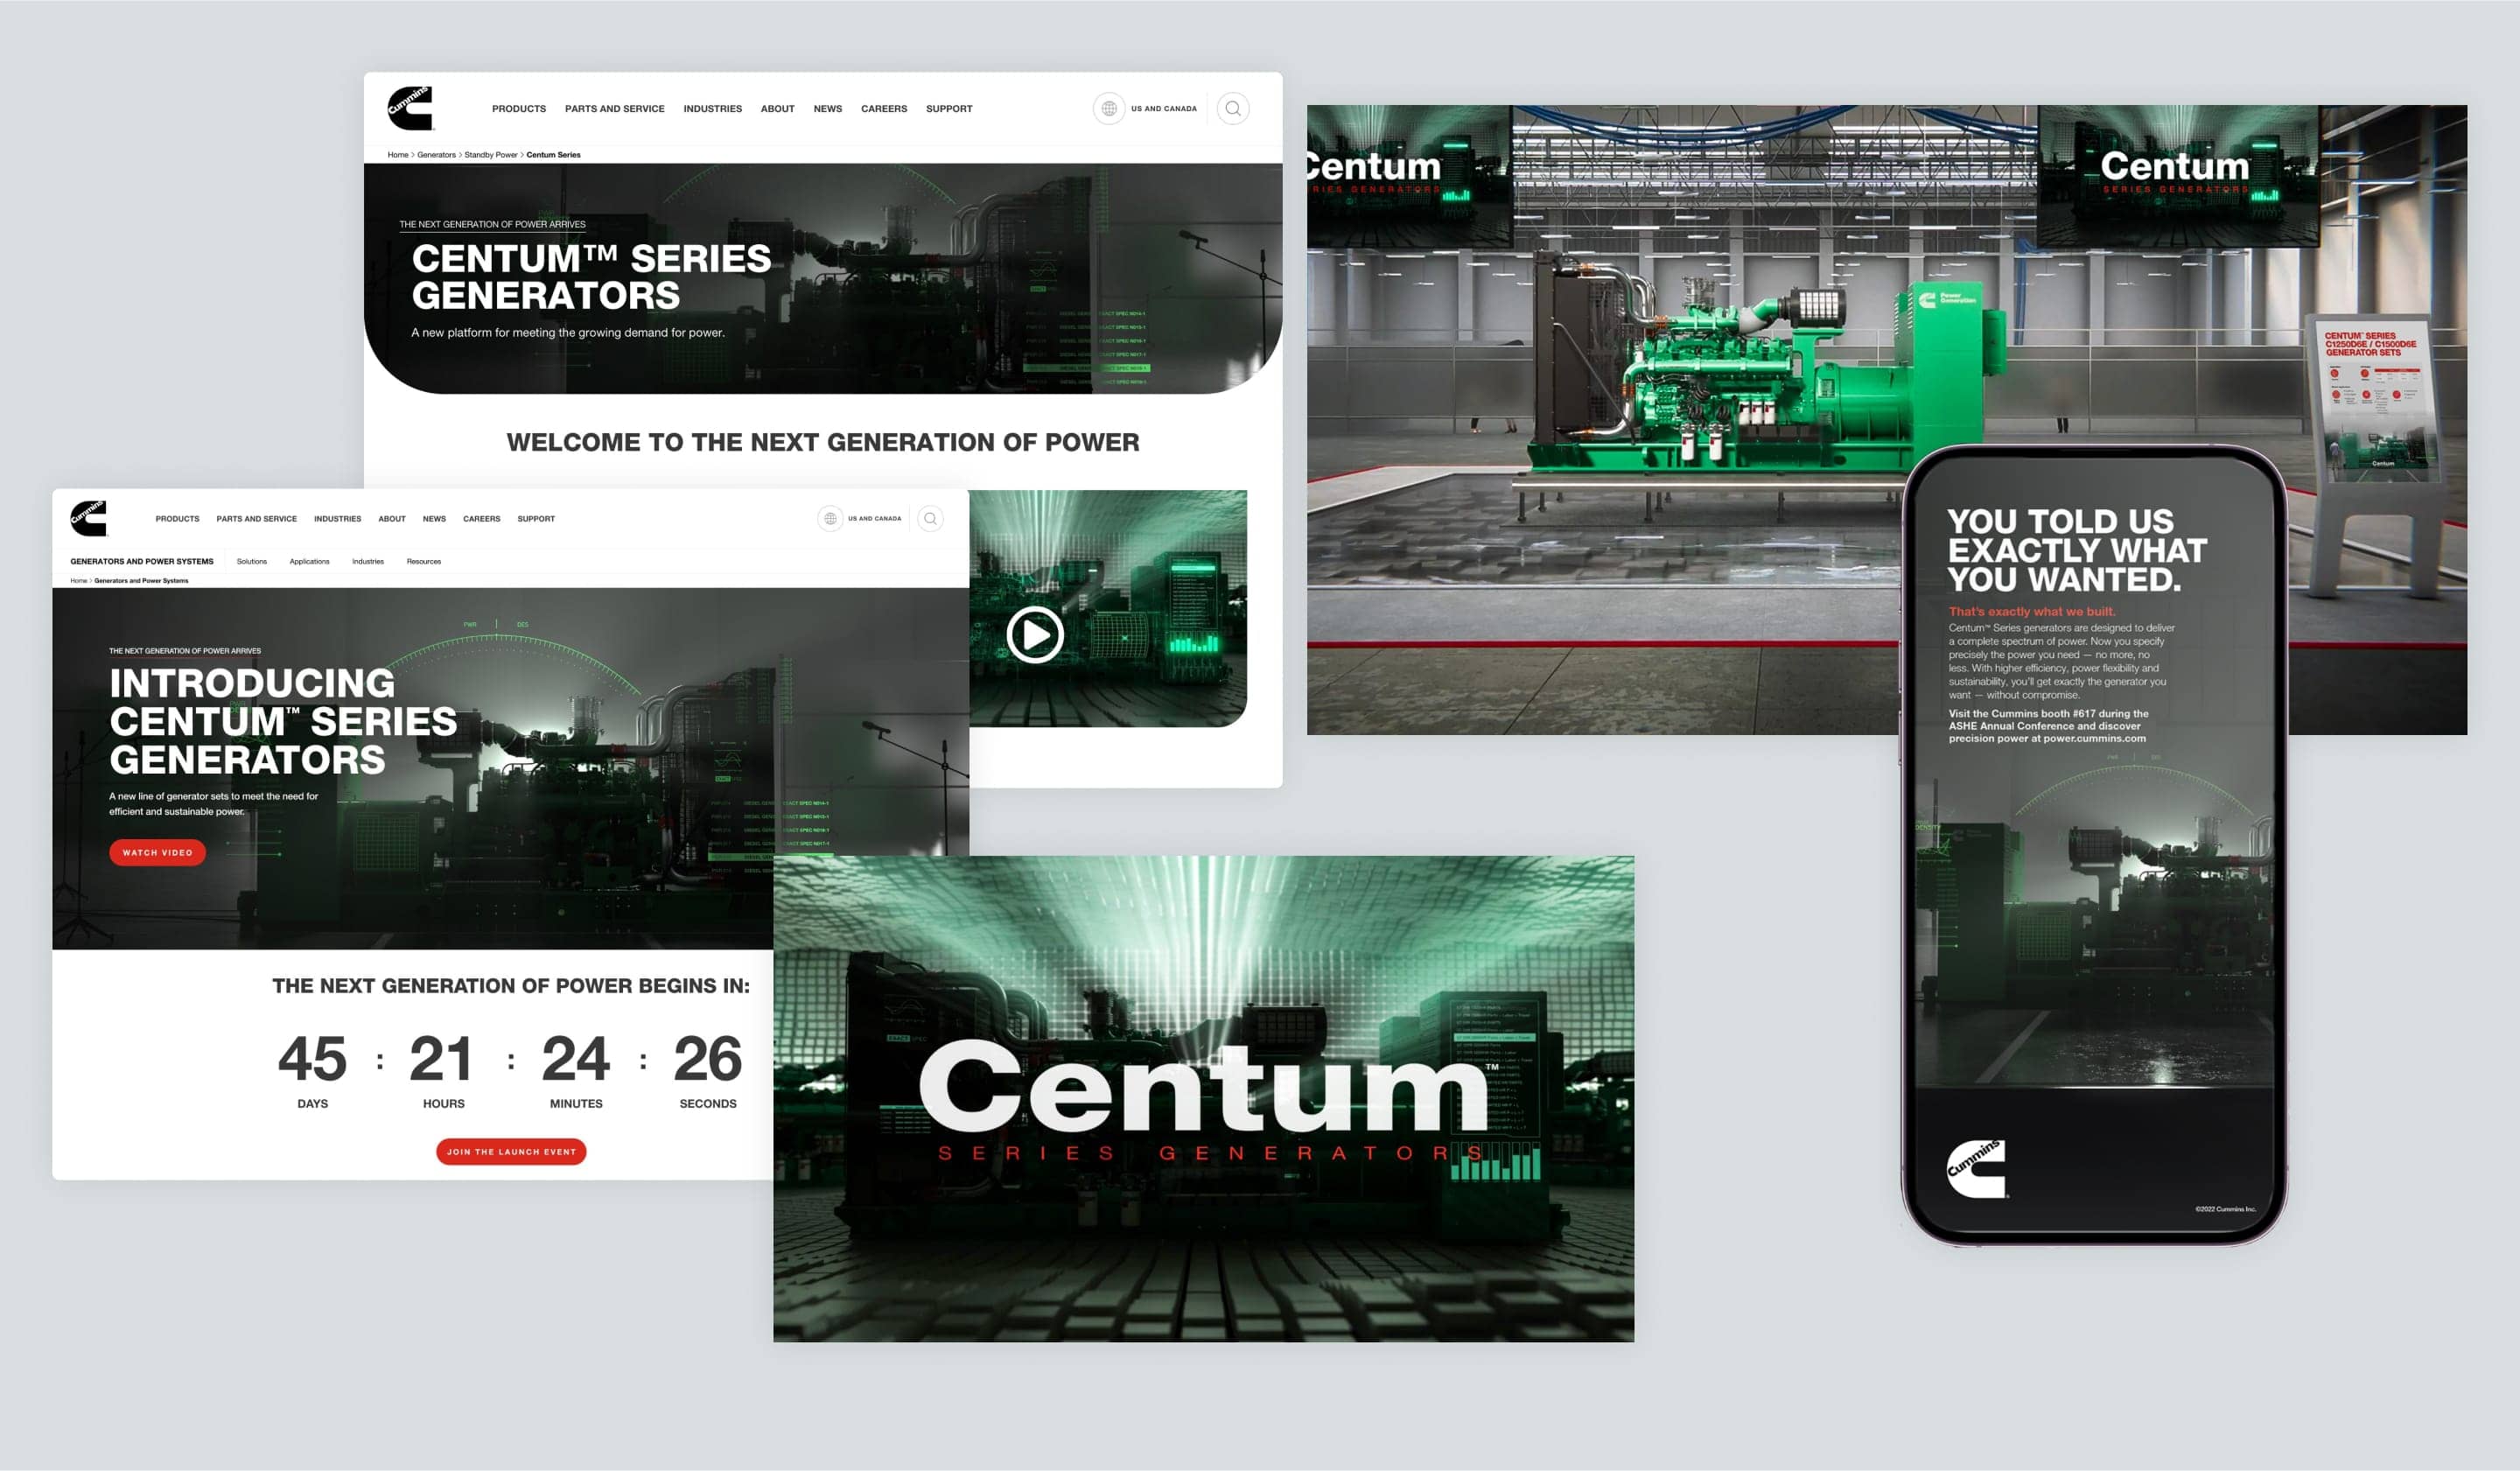 Cummins Centum™ PowerHour Event launch graphics